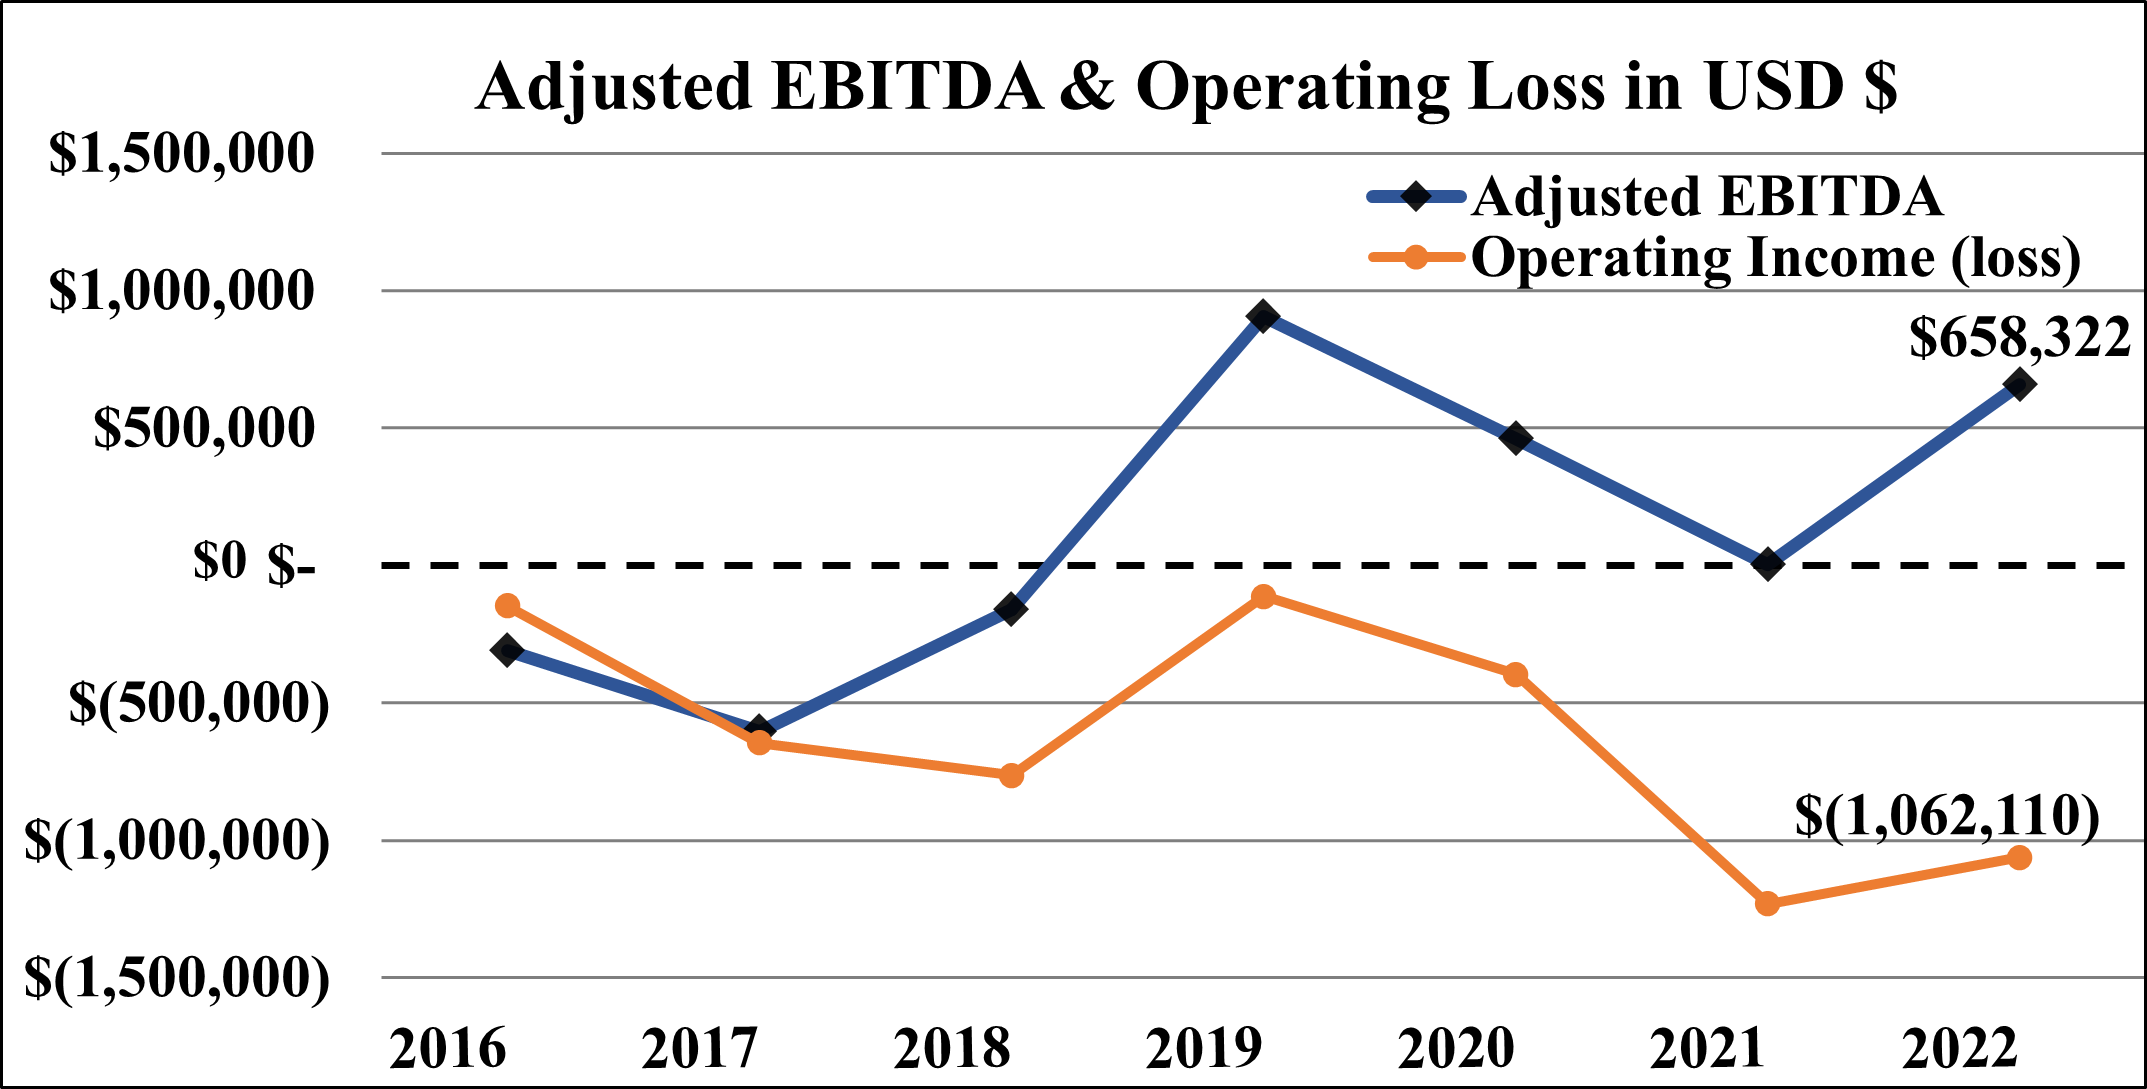 Adjusted EBITDA & Operating Loss in USD